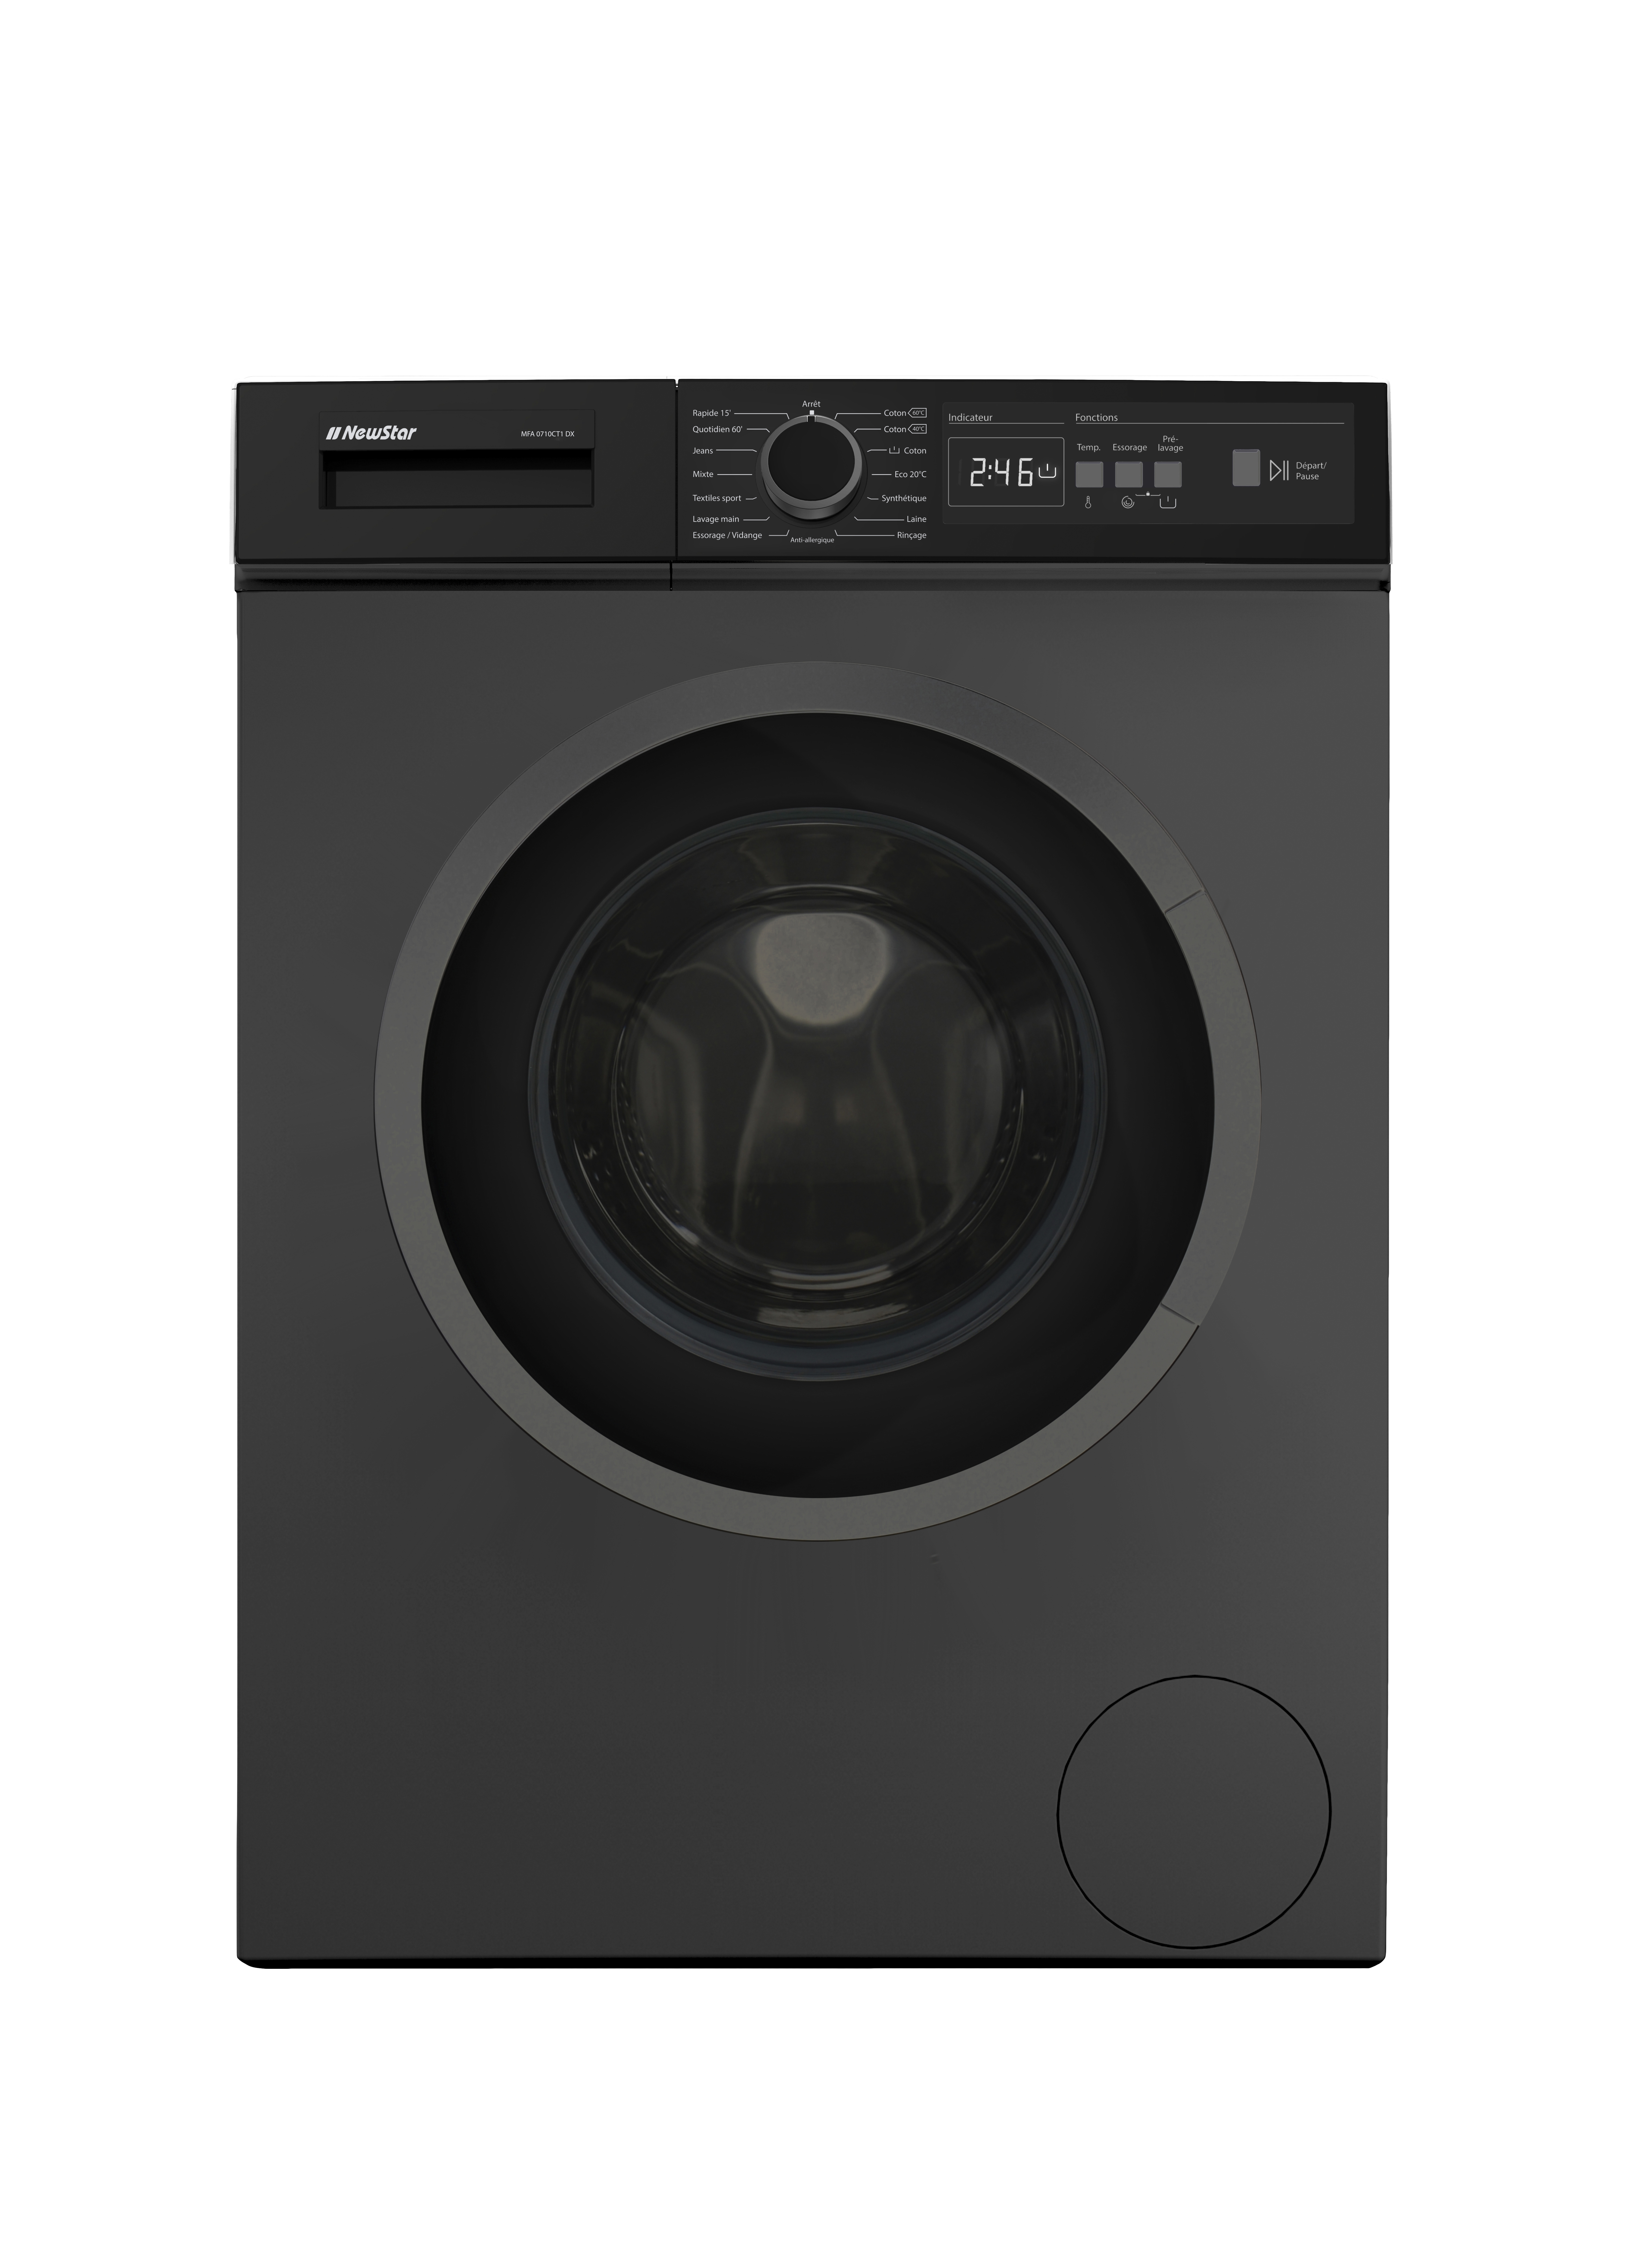 Machine à laver Frontale NEWSTAR  MFA0710CT1 DX   - 7 Kg - Dark Inox